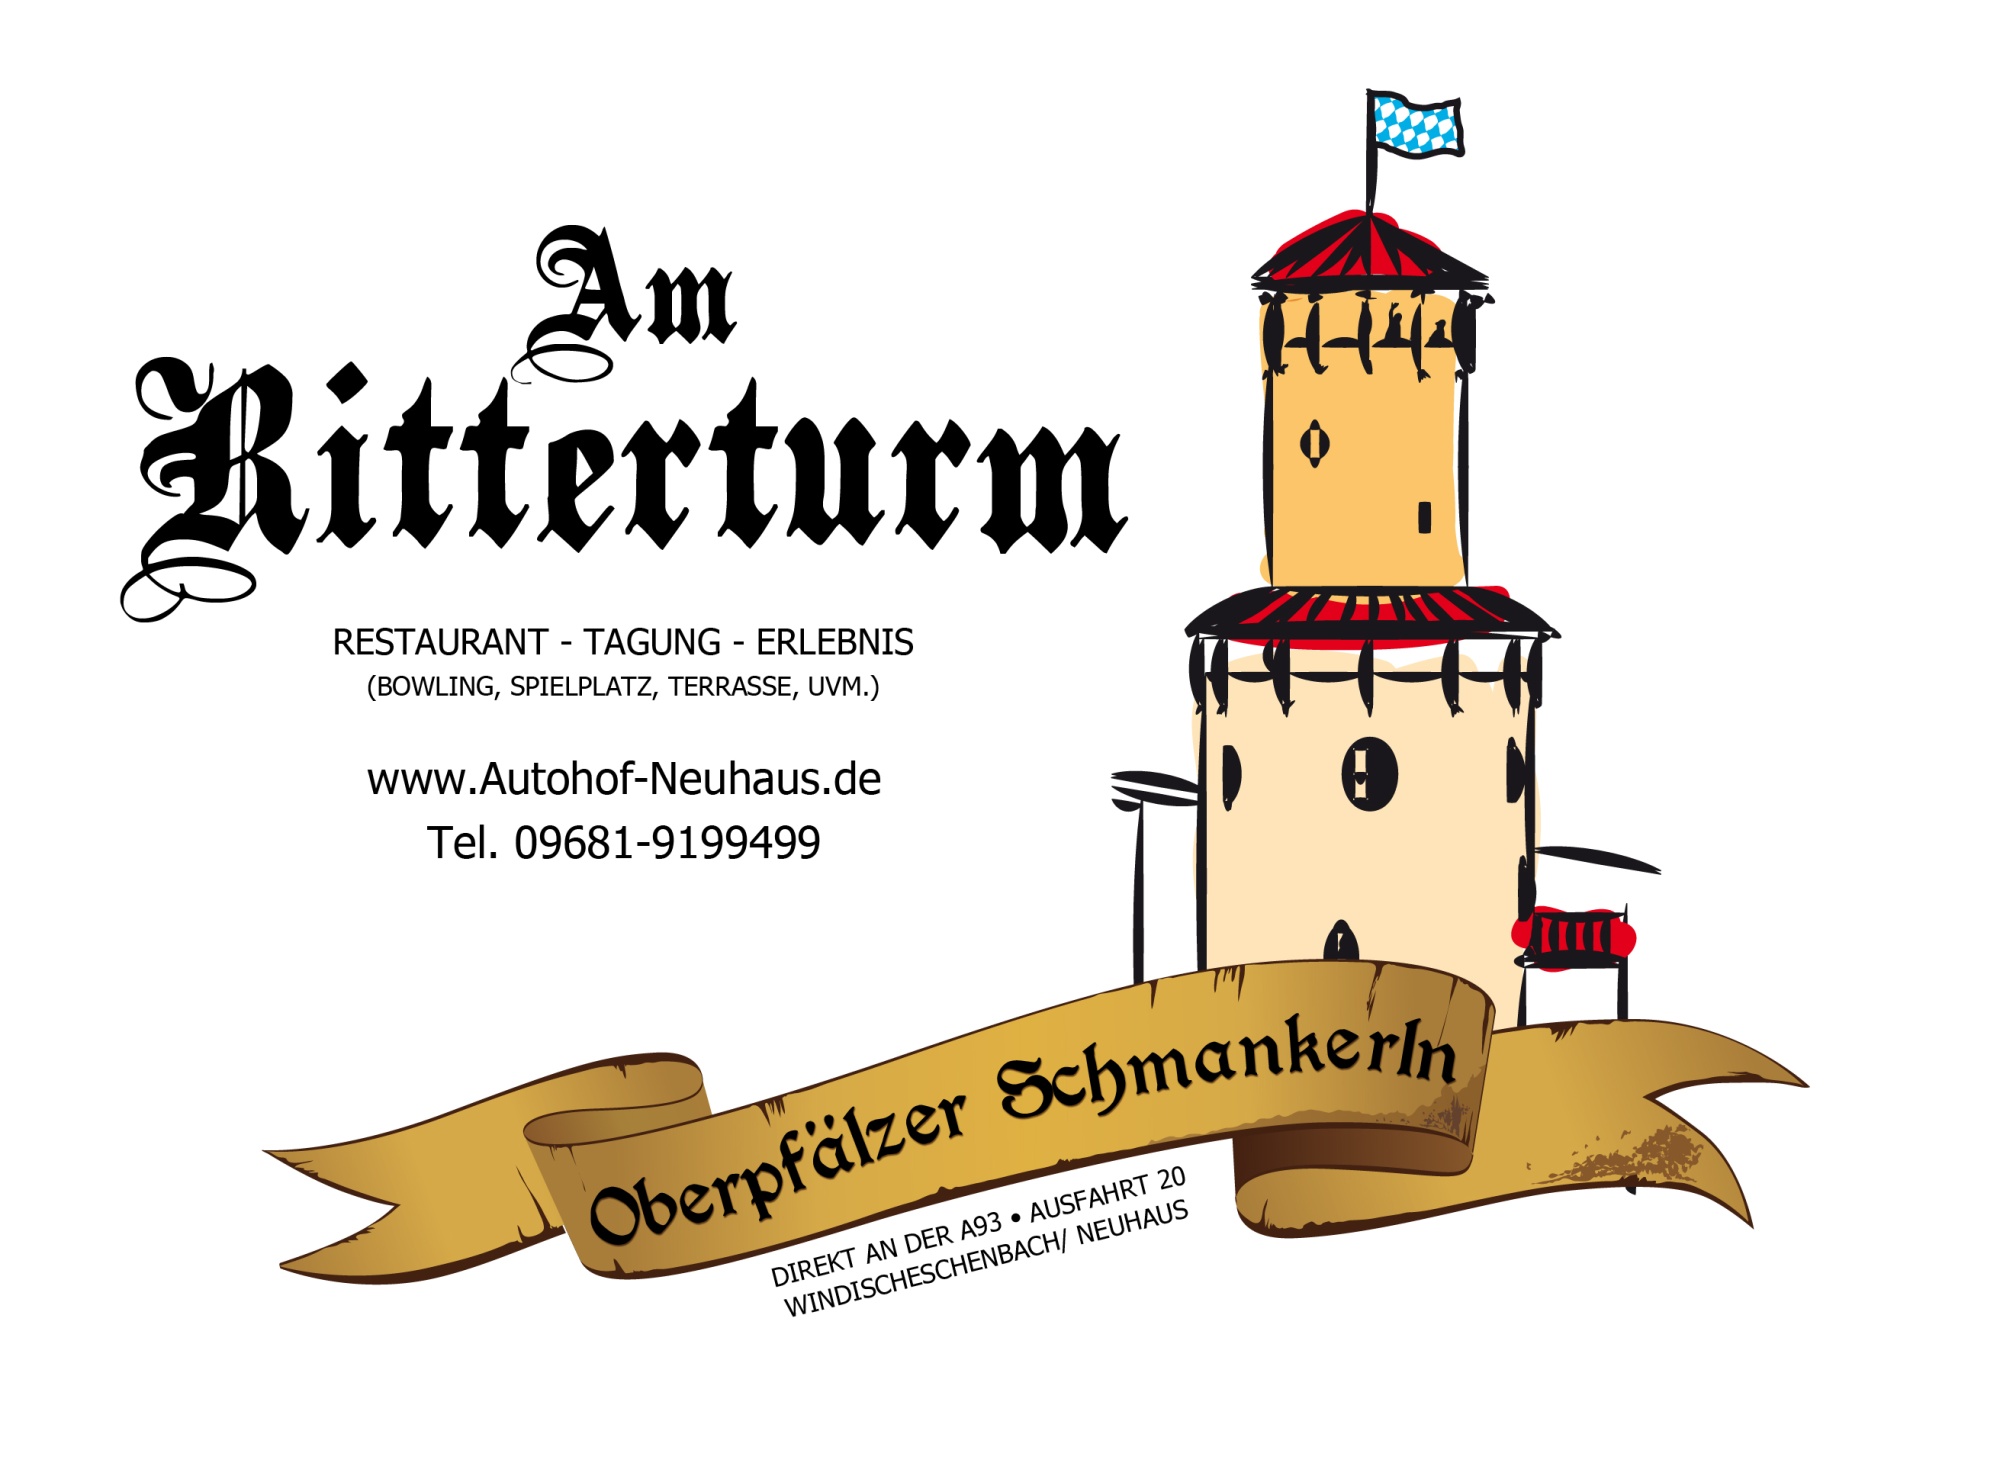 Logo Restaurant Am Ritterturm, links Name und Anschrift, rechts im Bild der markante Ritterturm des Autohofes in Windischeschenbach